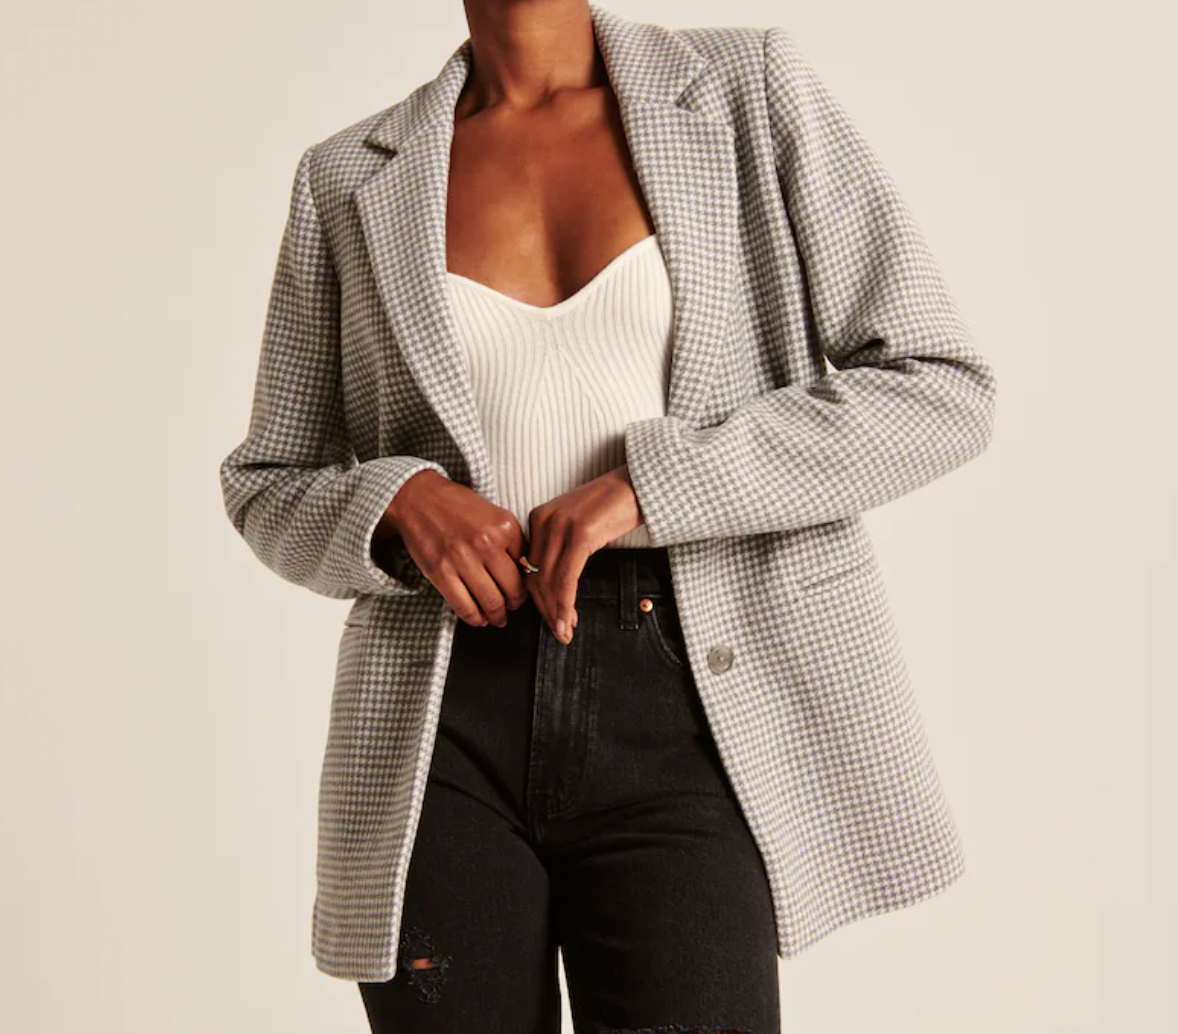 Wool-Blend Blazer Coat